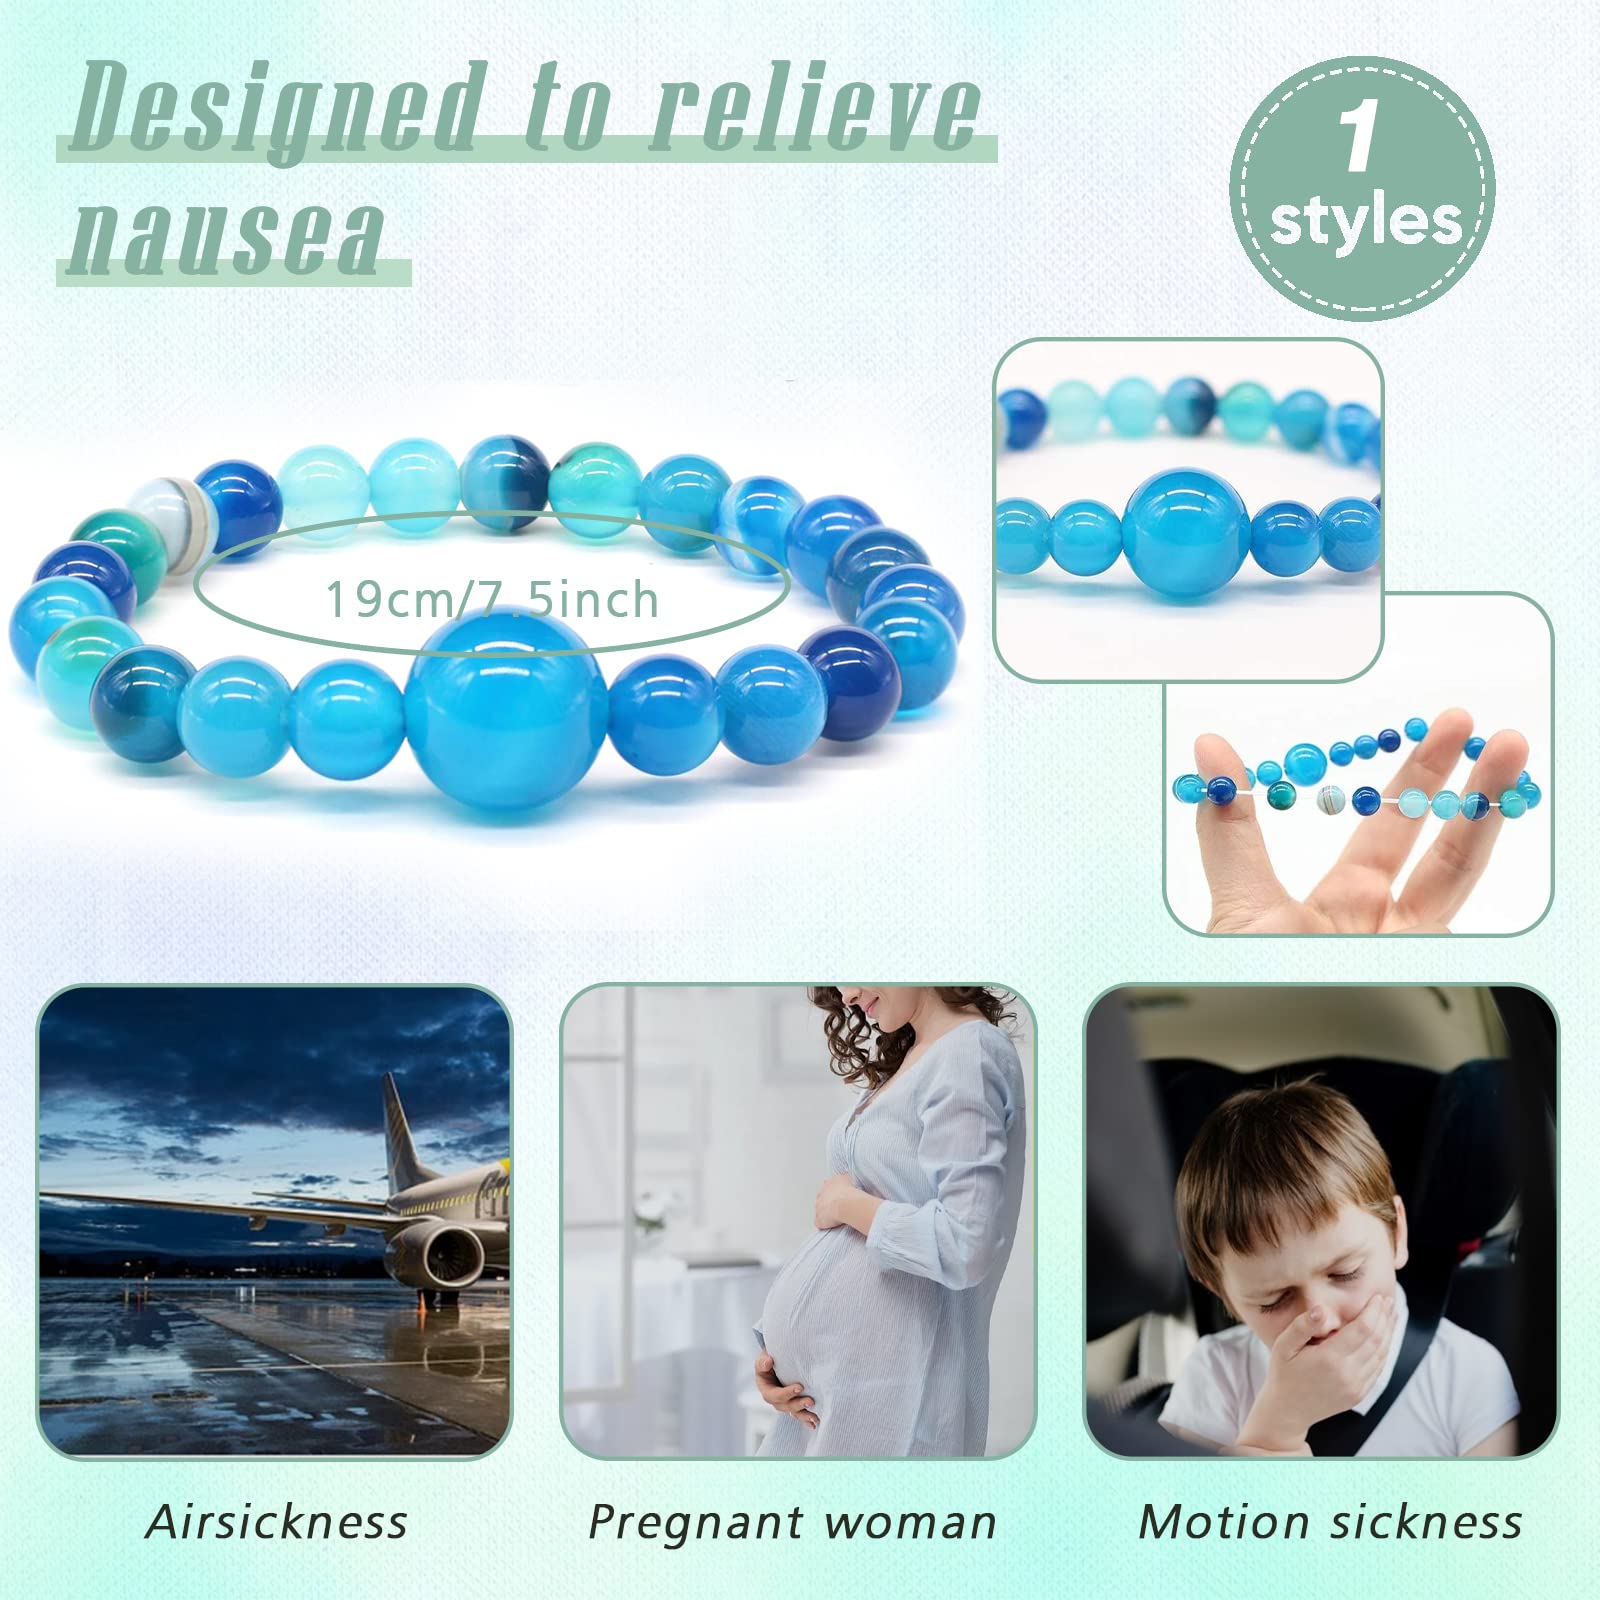 2x MORNING SICKNESS WRIST BANDS Pregnancy Anti-Nausea Acupressure Drug Free  | eBay